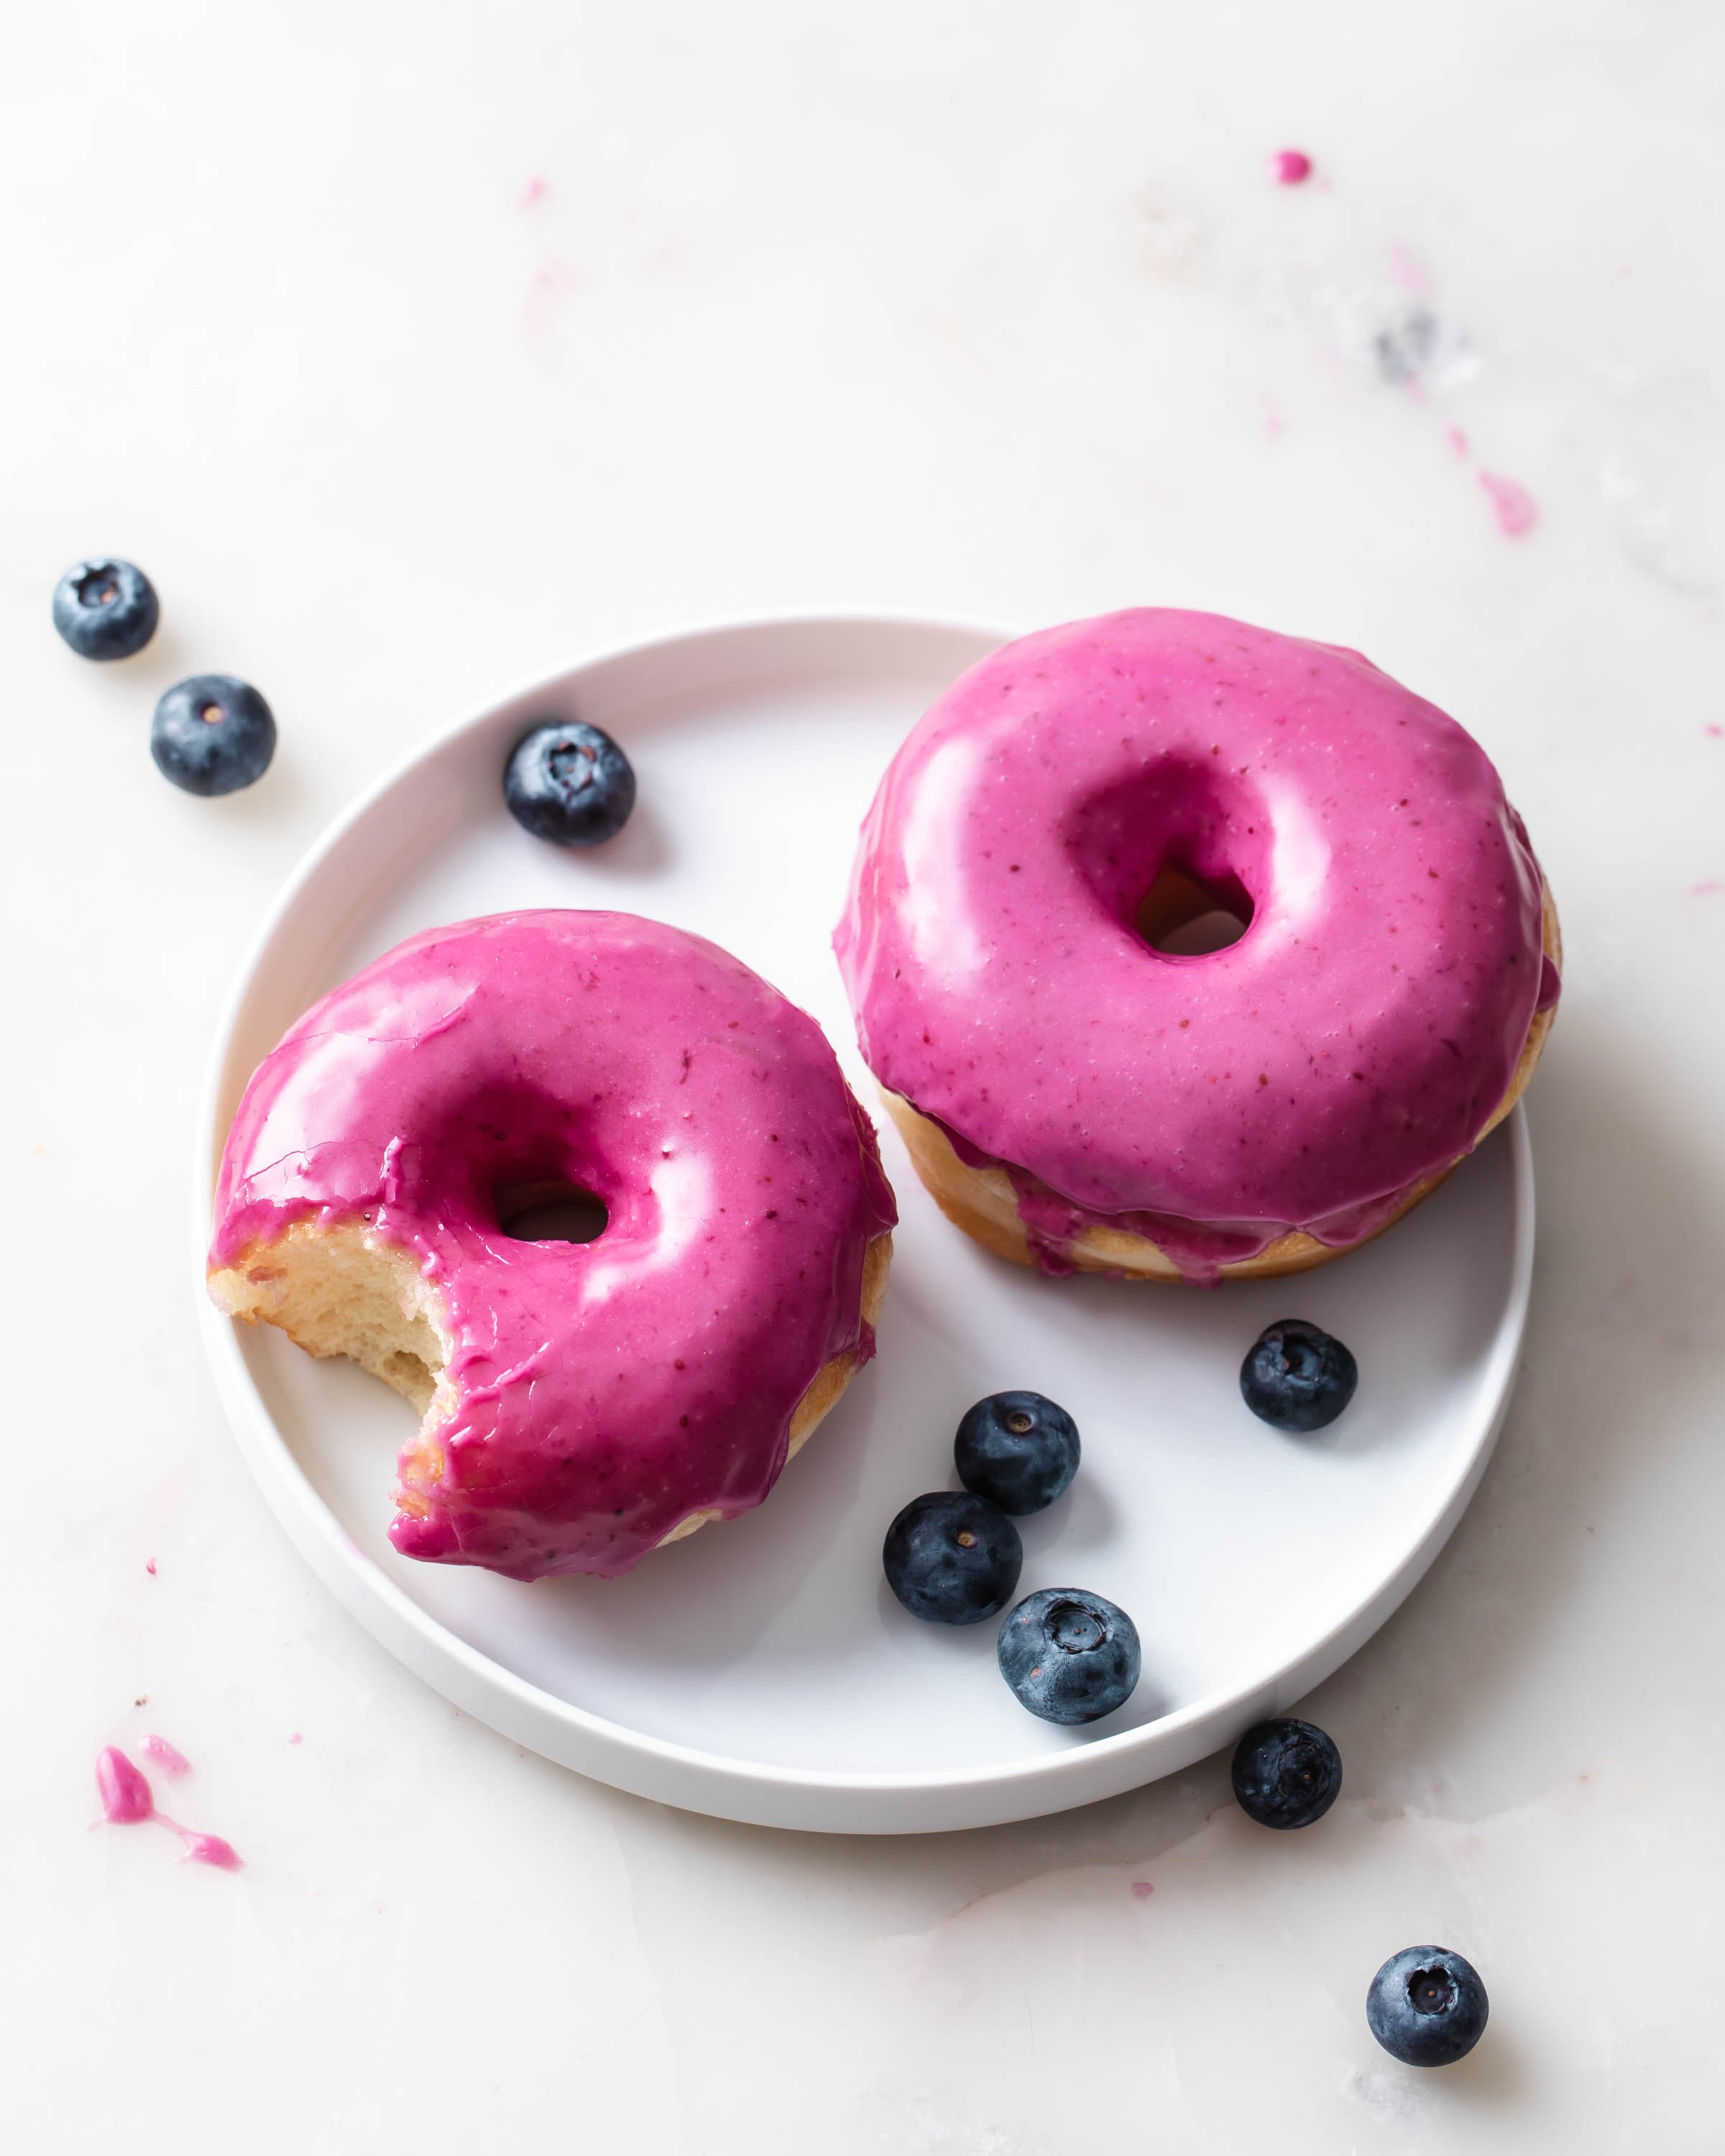 Blueberry glazed brioche donuts